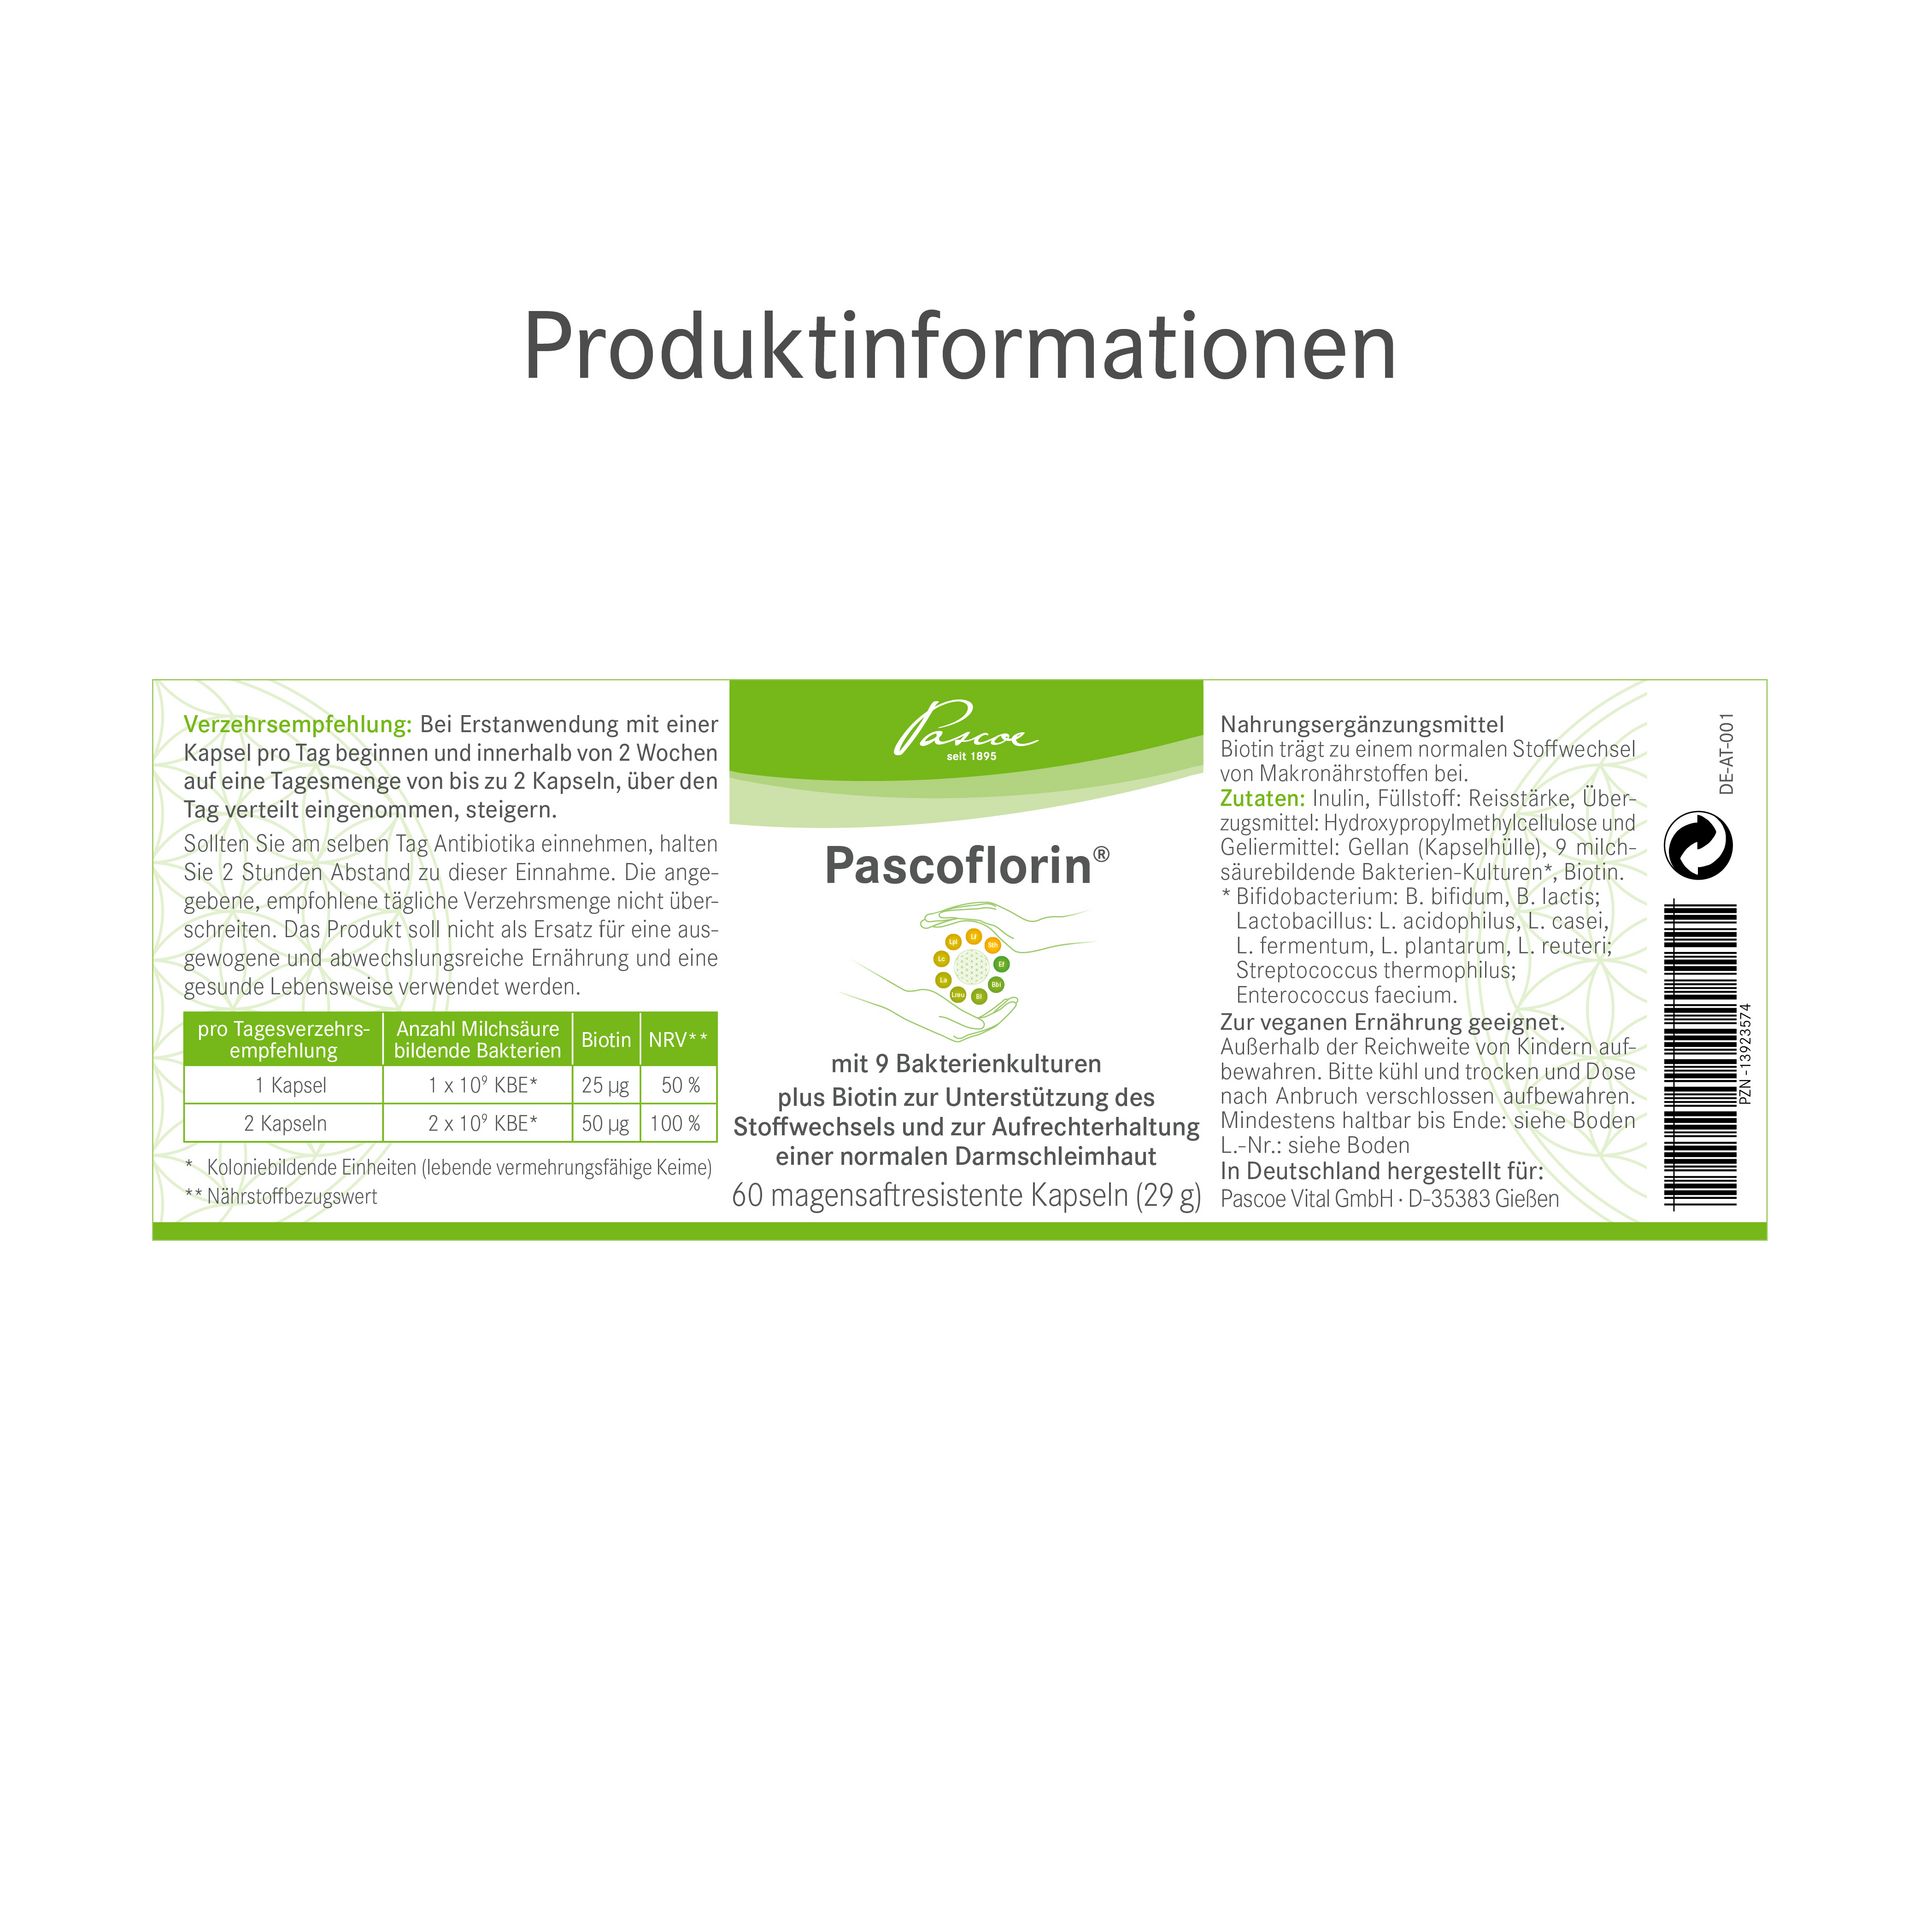 Pascoflorin Produktinformationen